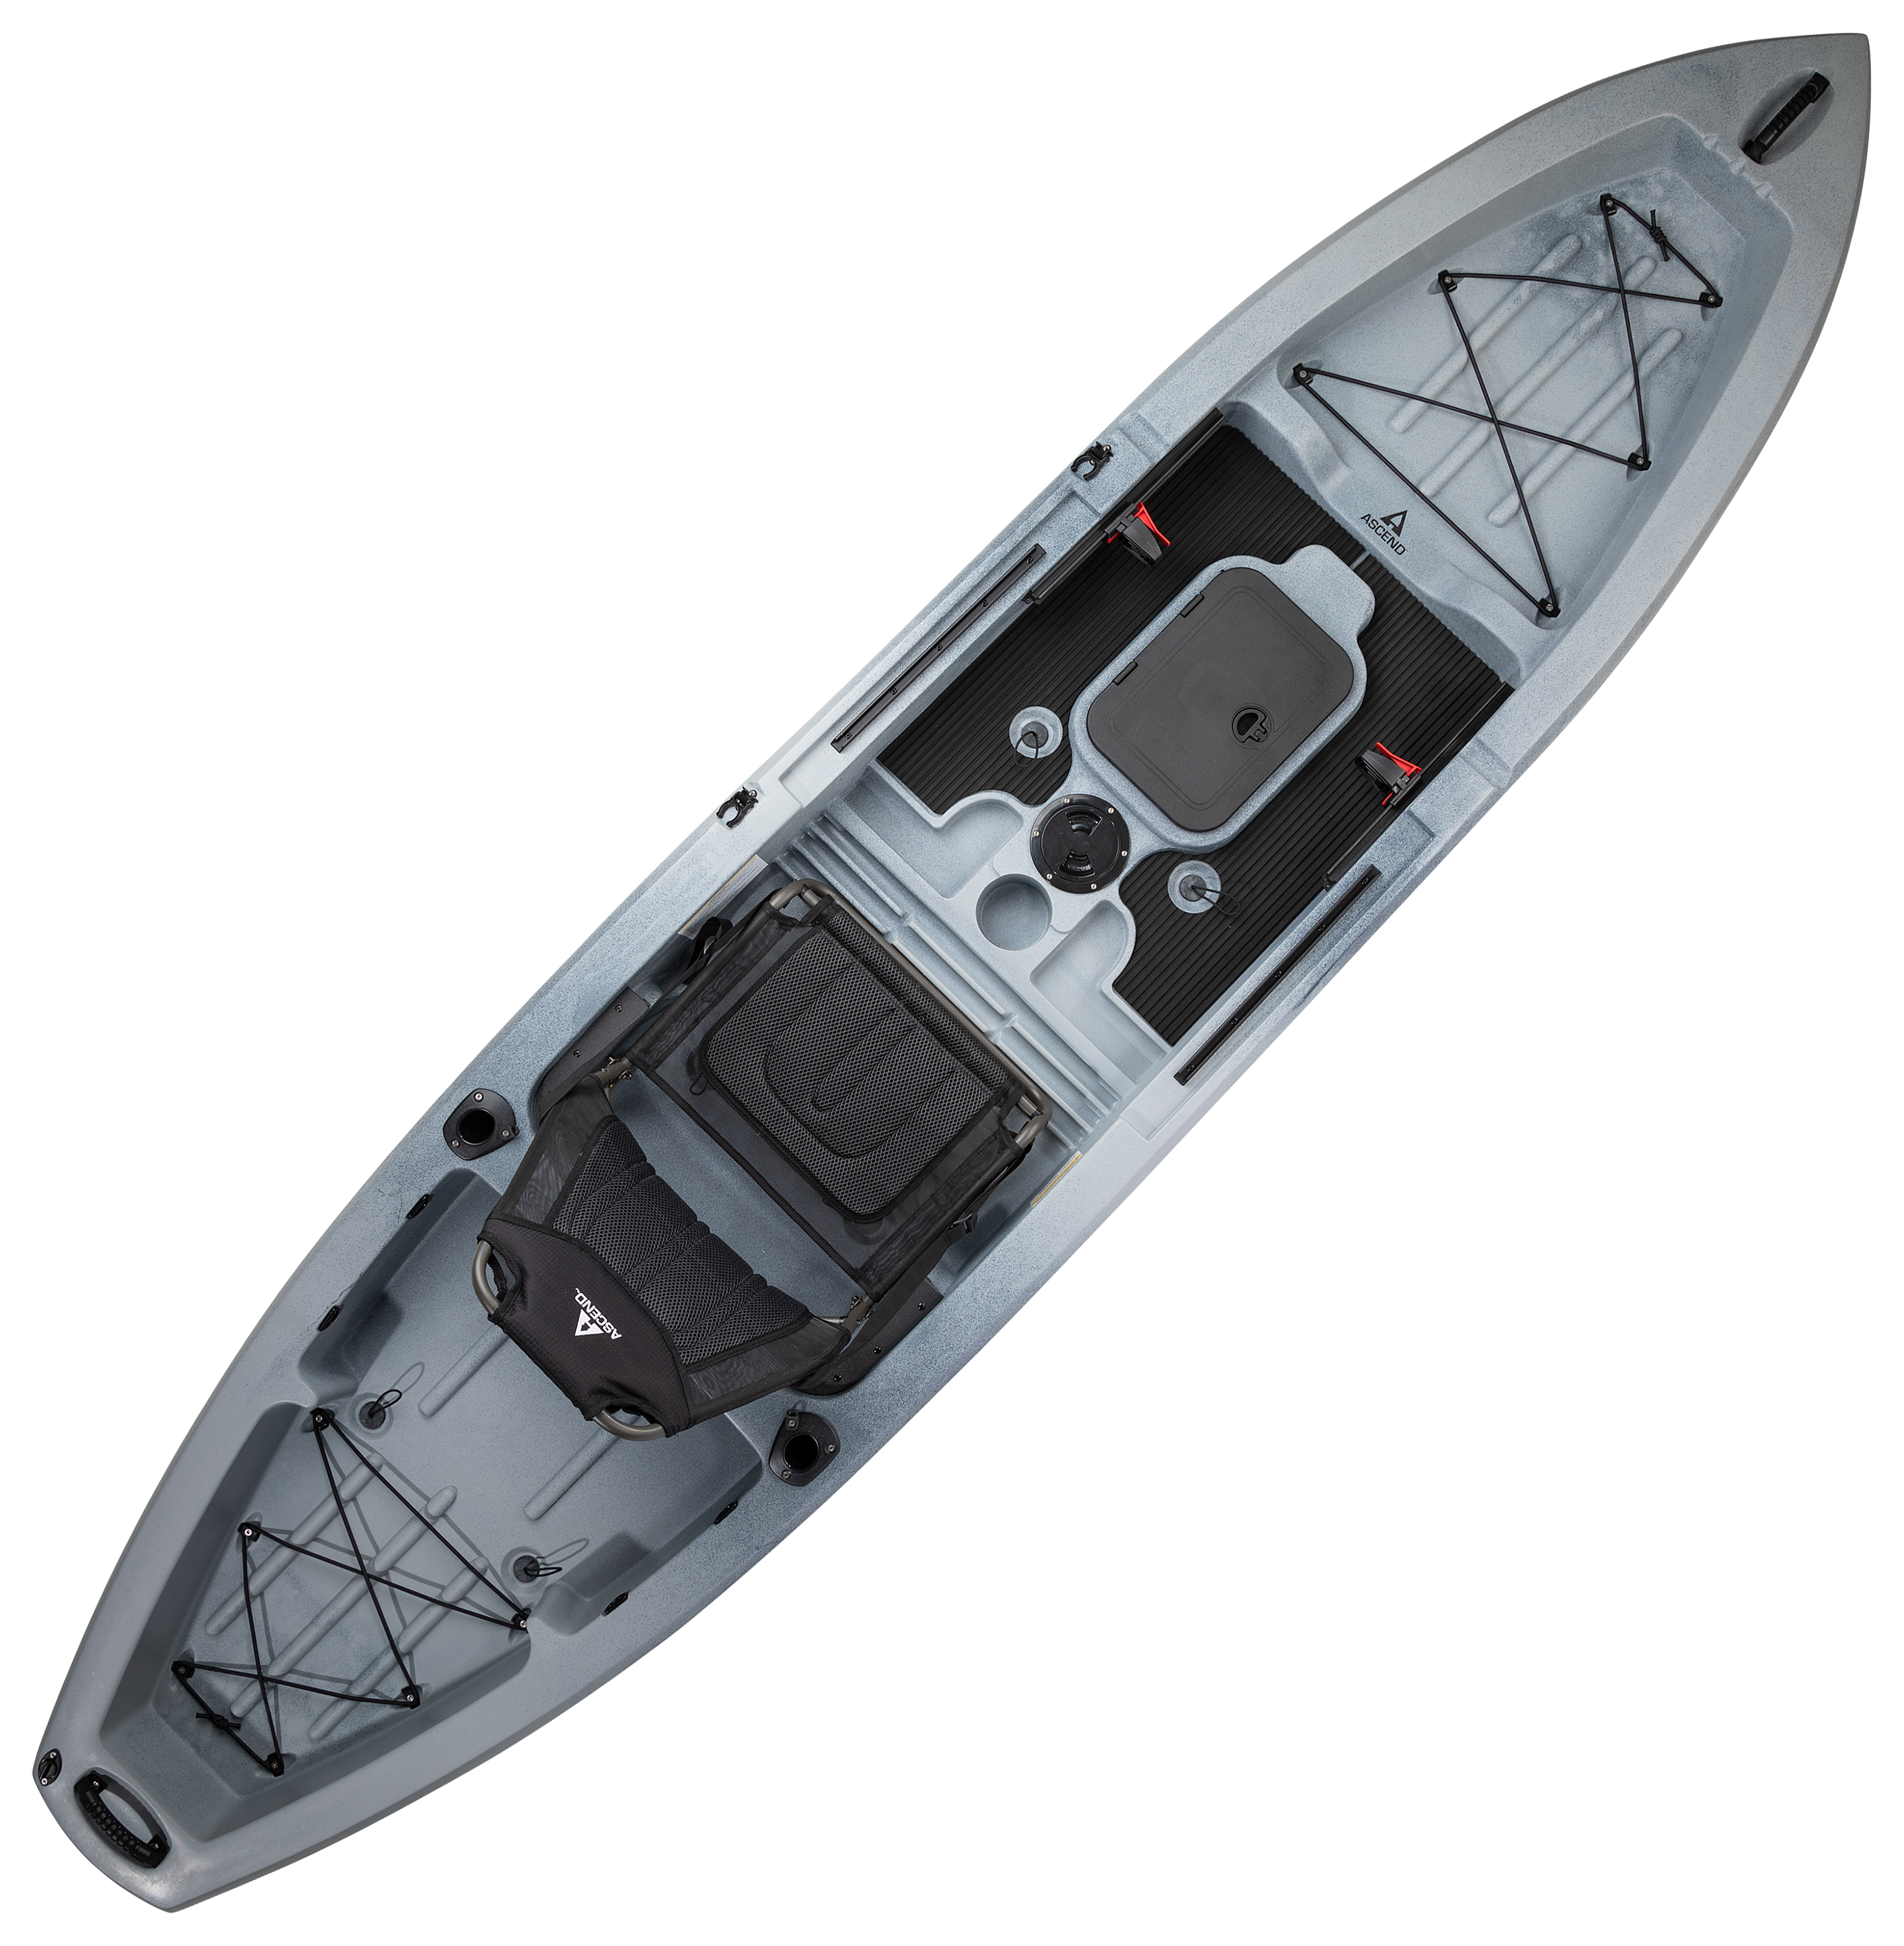 height of rail bowfishing platform - Google Search  Kayak fishing, Fishing  boats, Small fishing boats